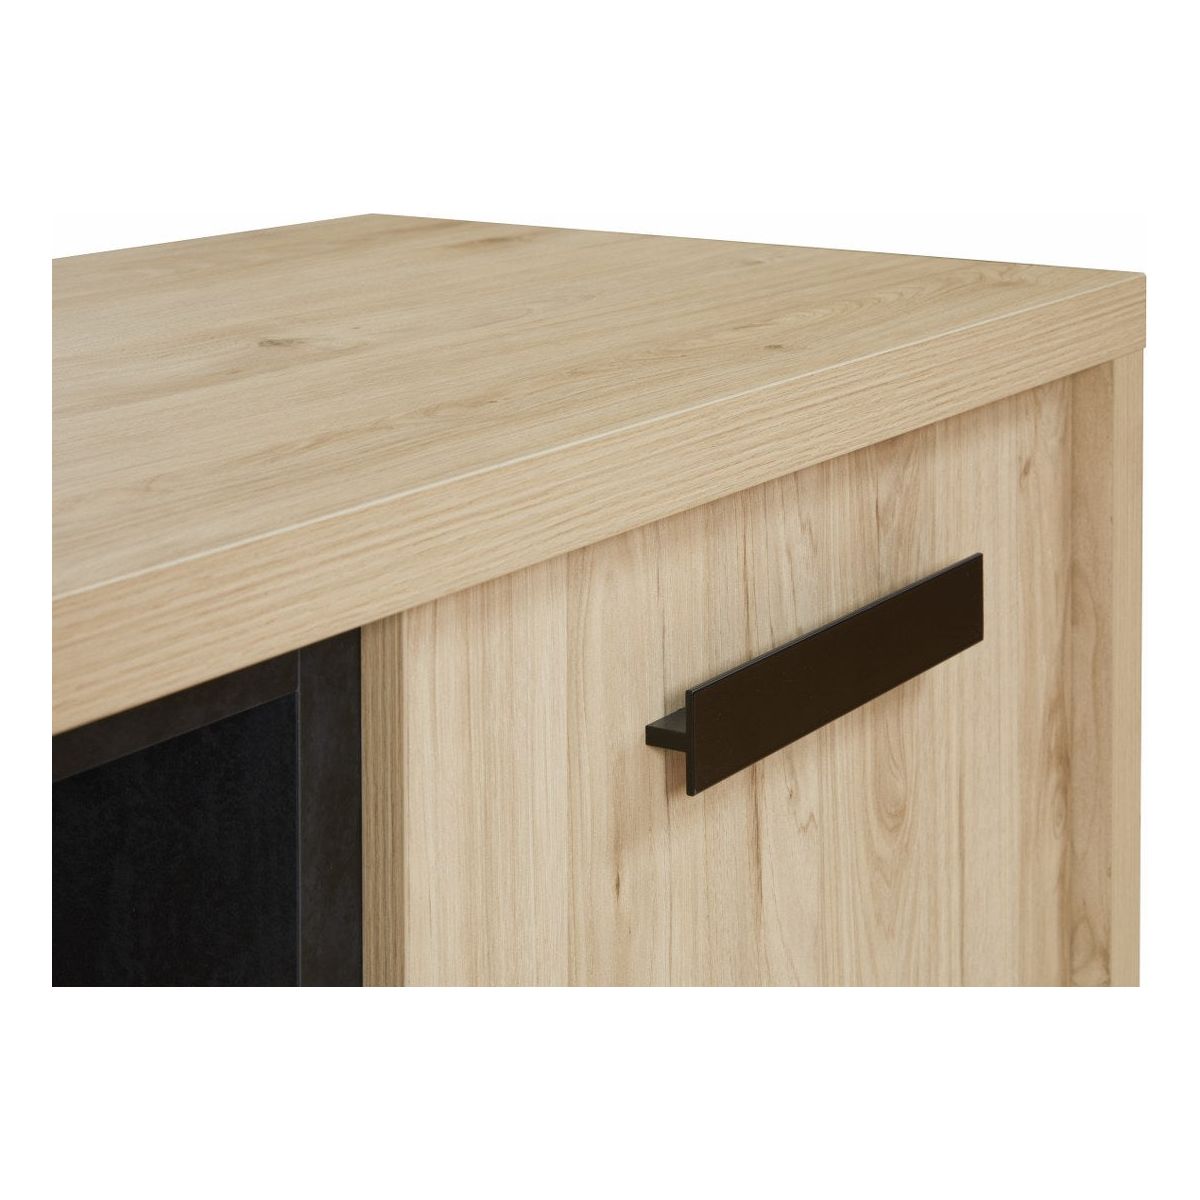 TV cabinet | Furniture series Tilly | brown, natural, black | 168